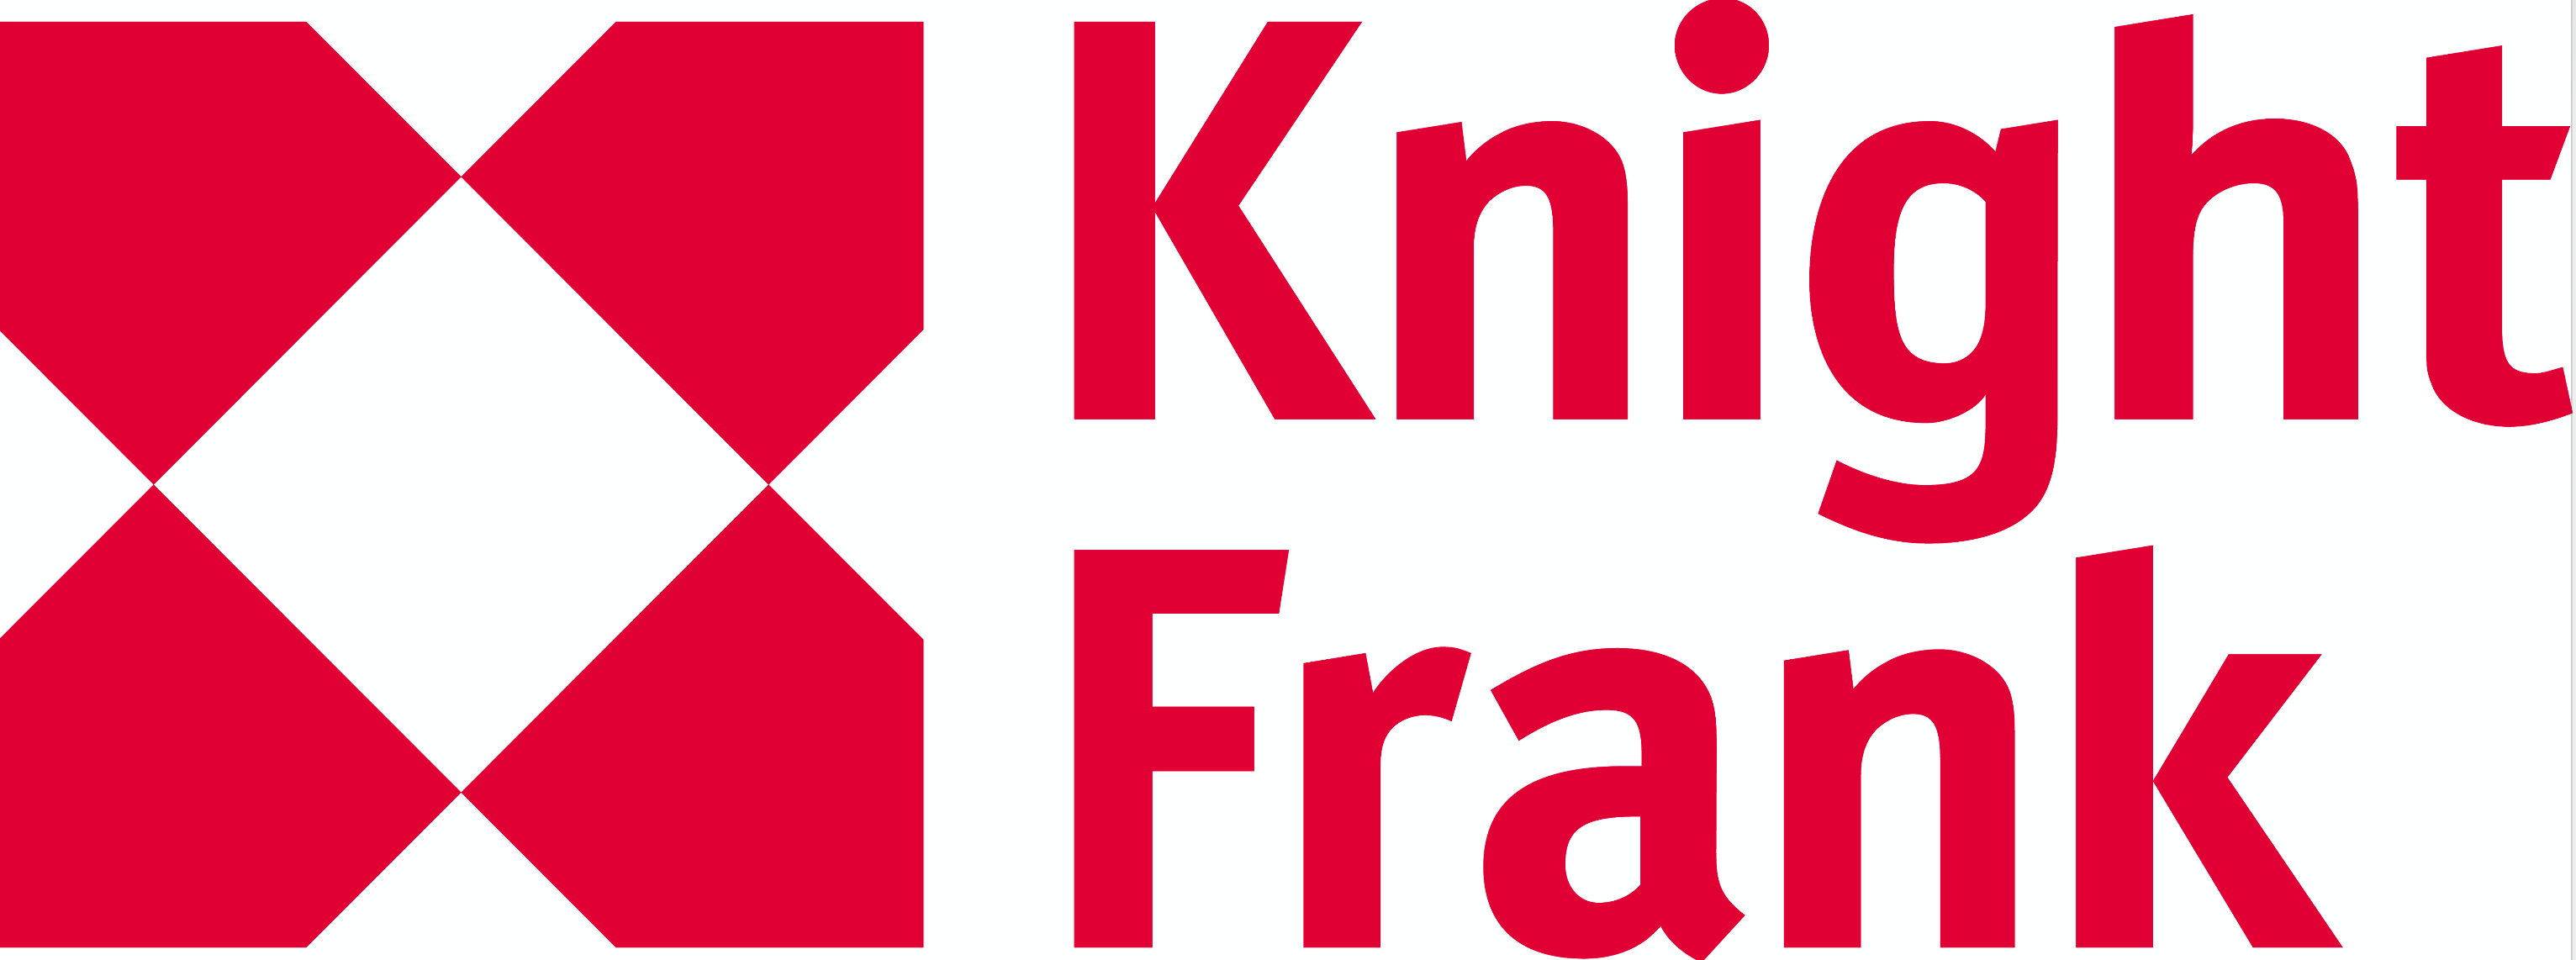 Knight Frank - London